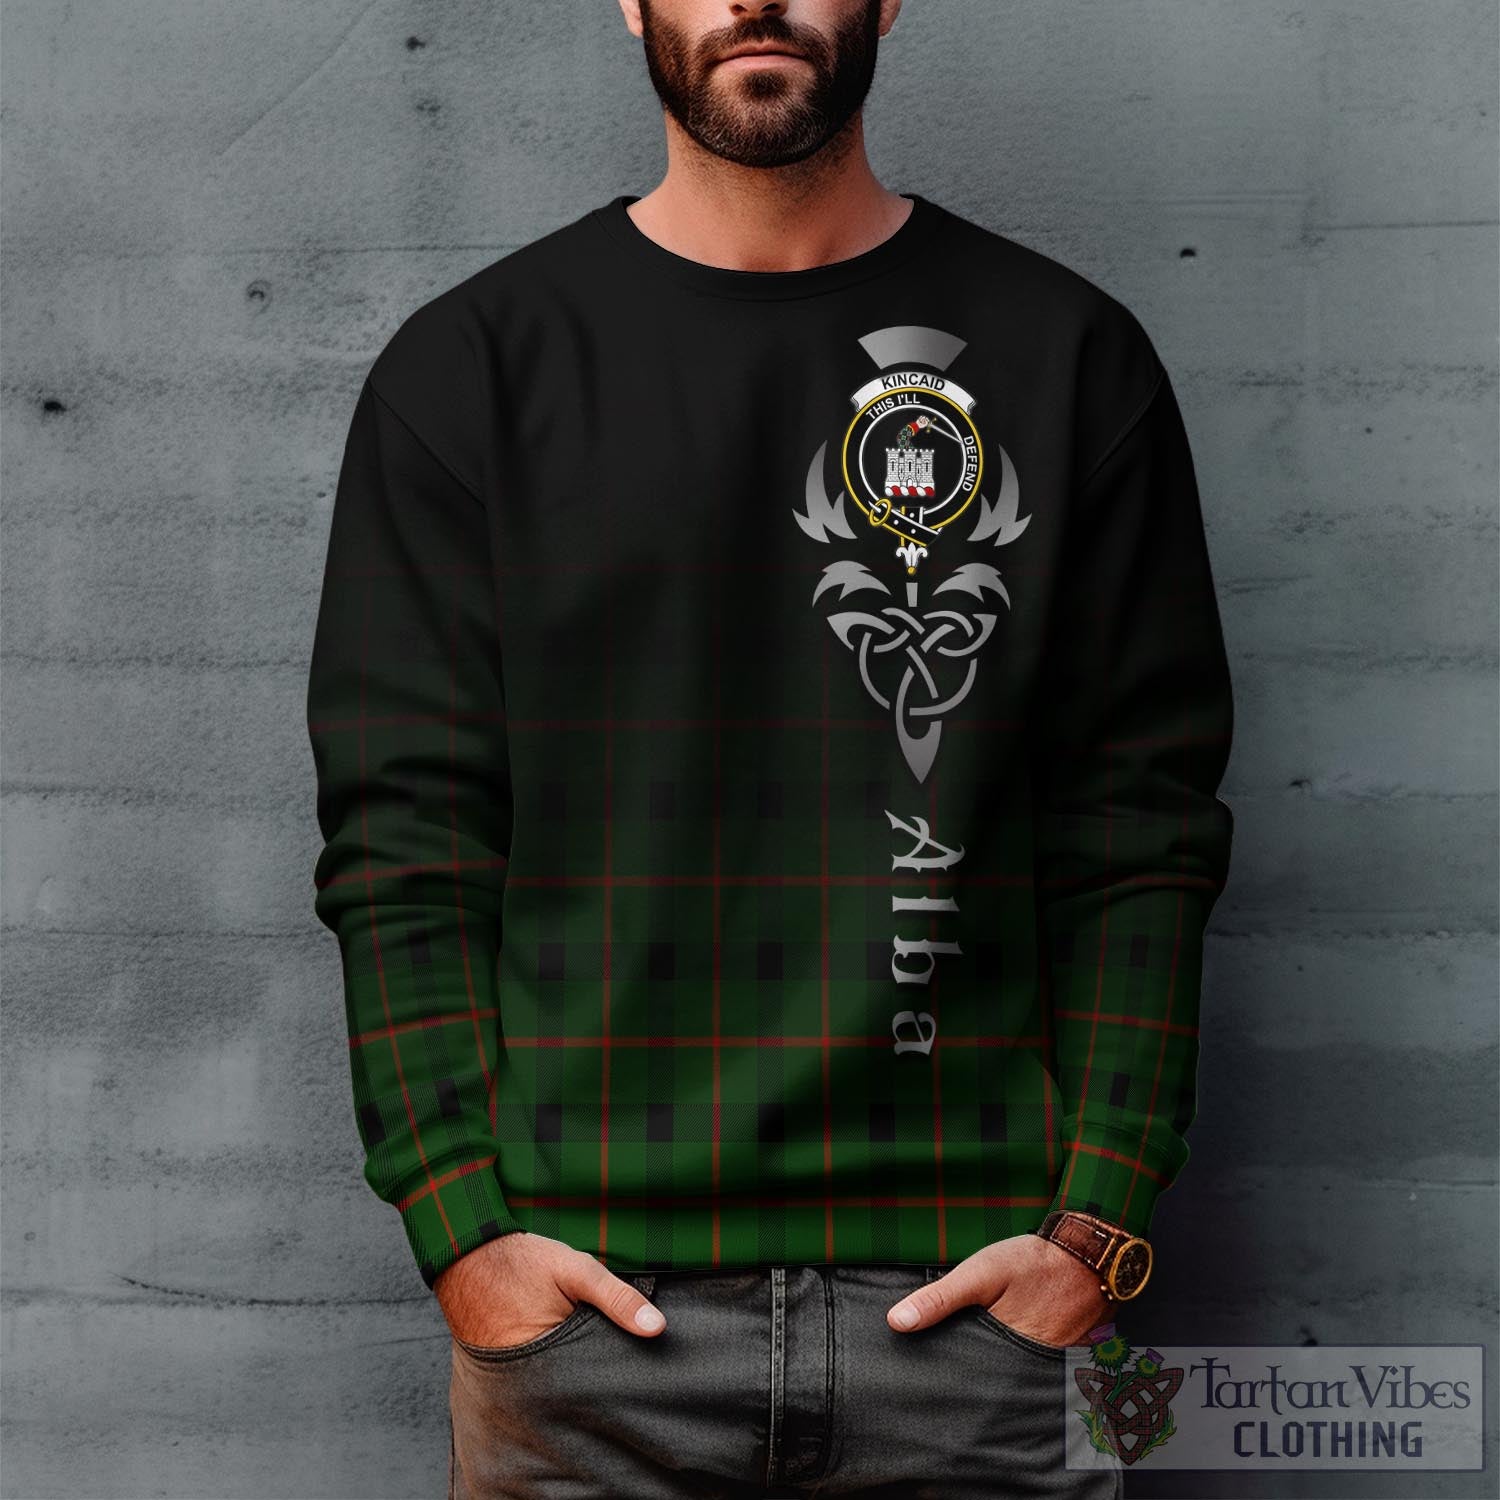 Tartan Vibes Clothing Kincaid Modern Tartan Sweatshirt Featuring Alba Gu Brath Family Crest Celtic Inspired